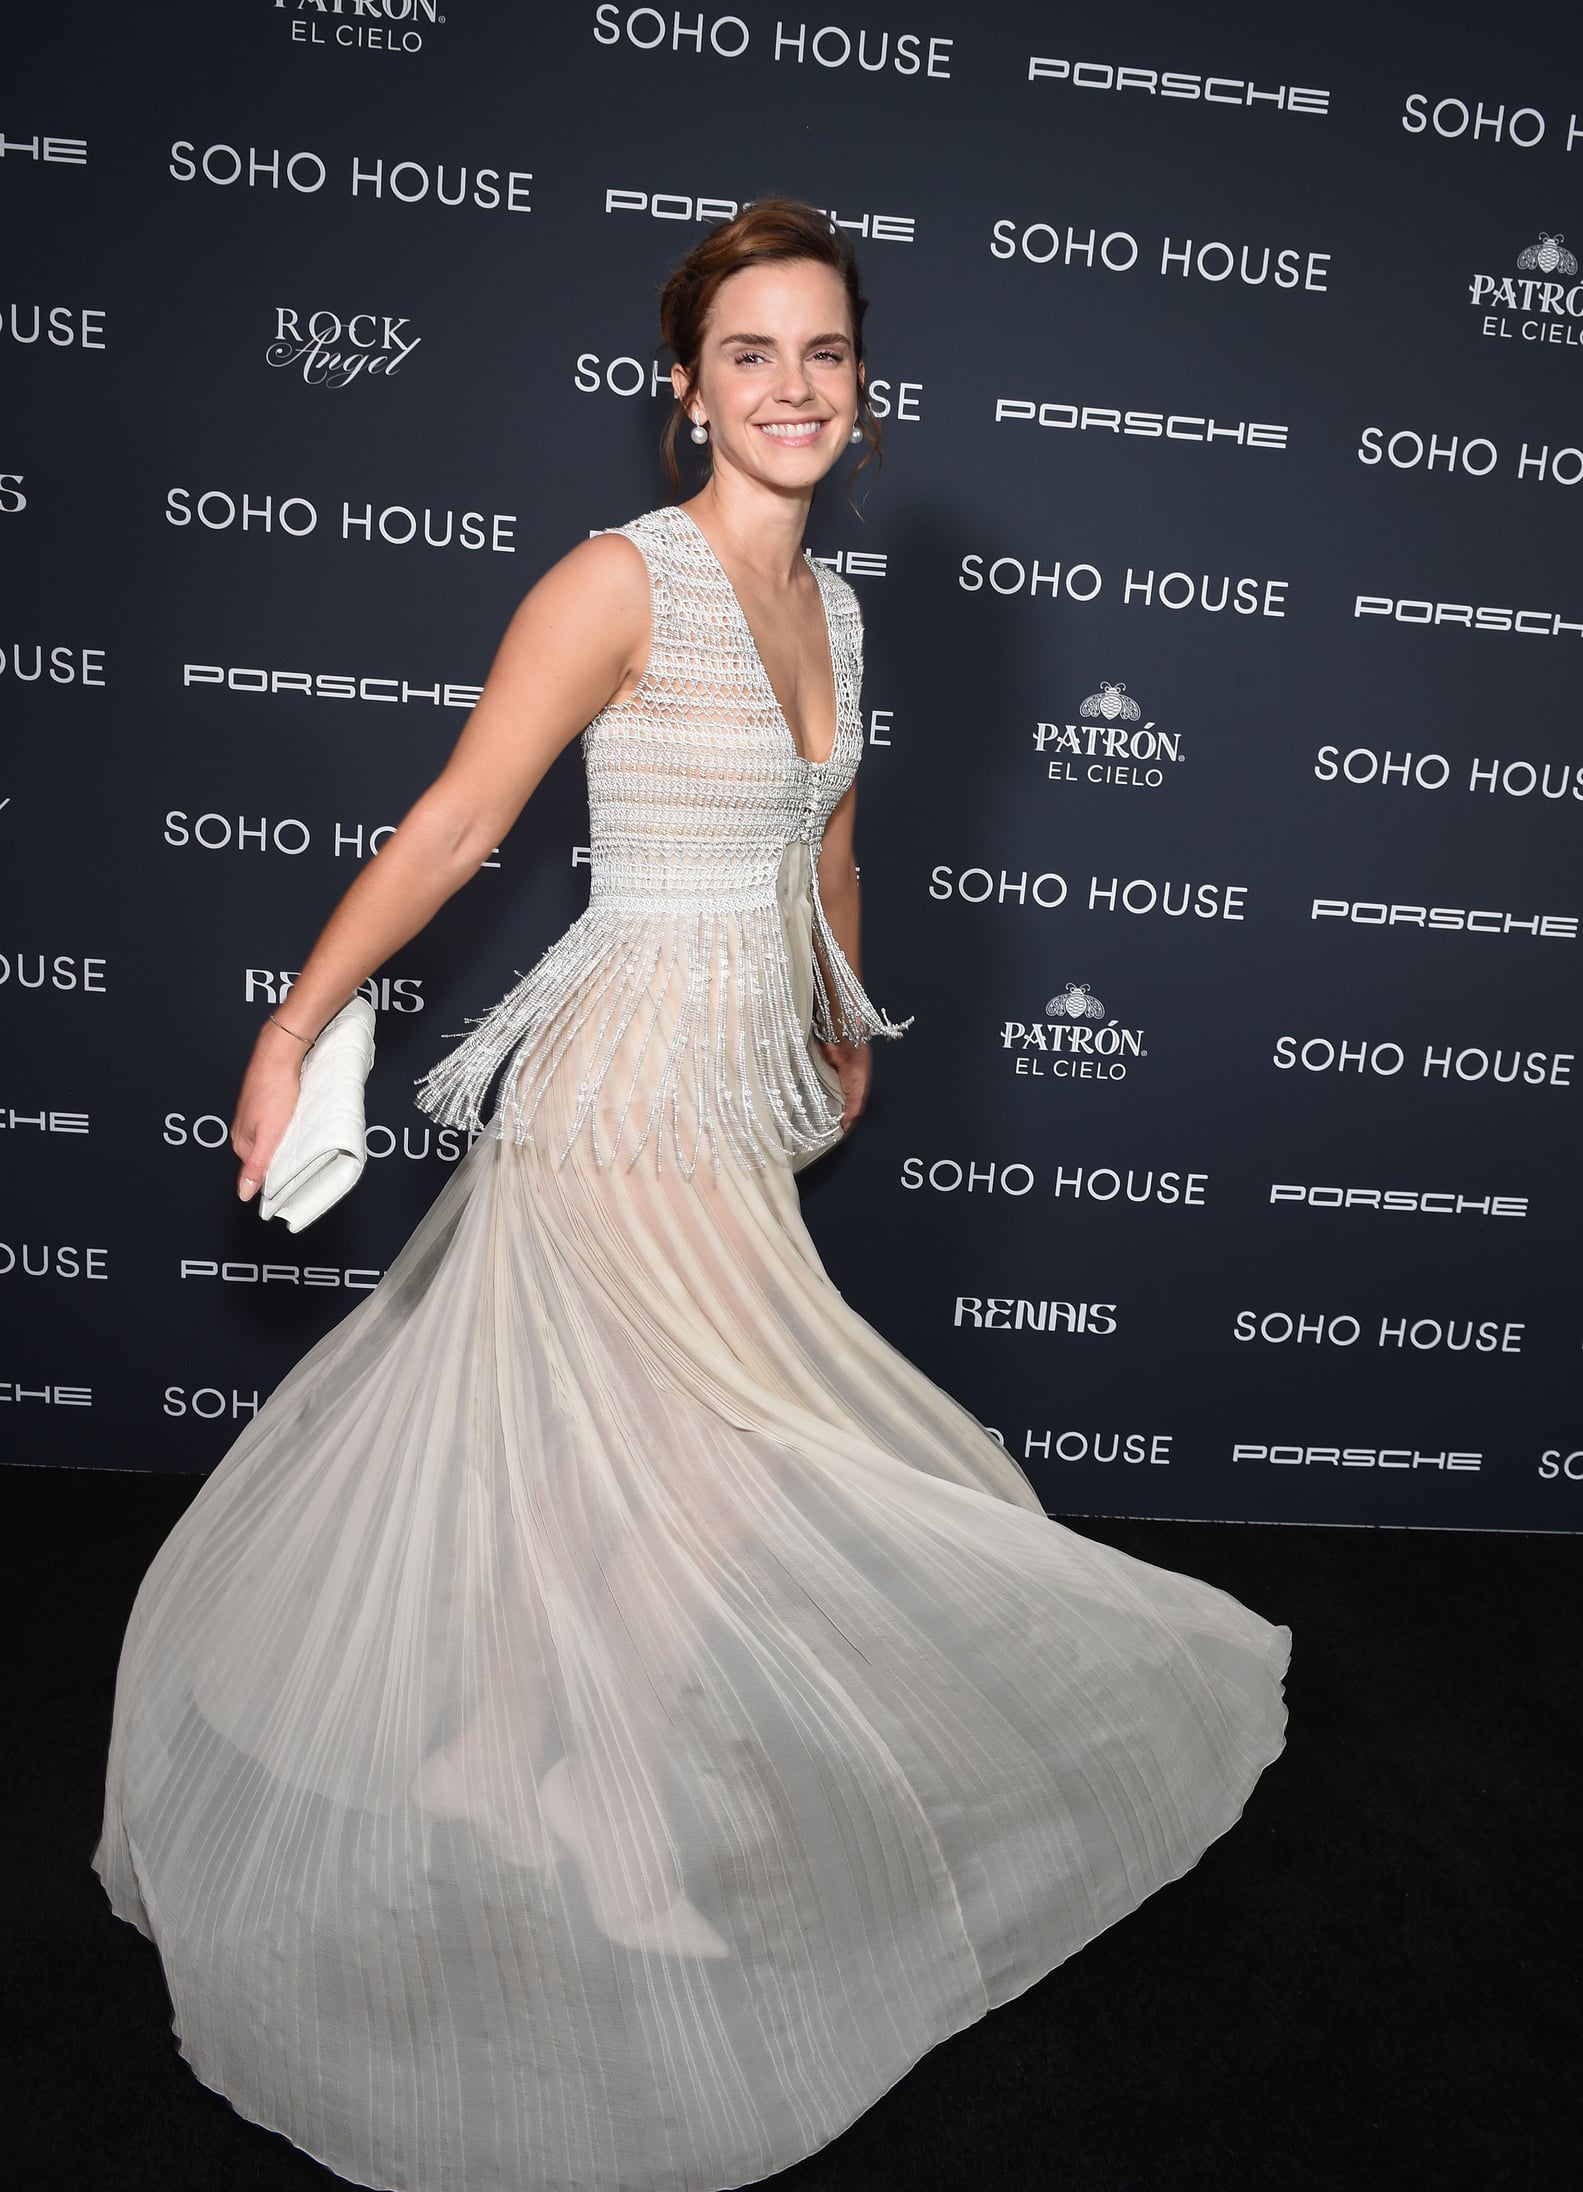 Emma Watson's White Dior Dress at the Soho House Awards | POPSUGAR Fashion